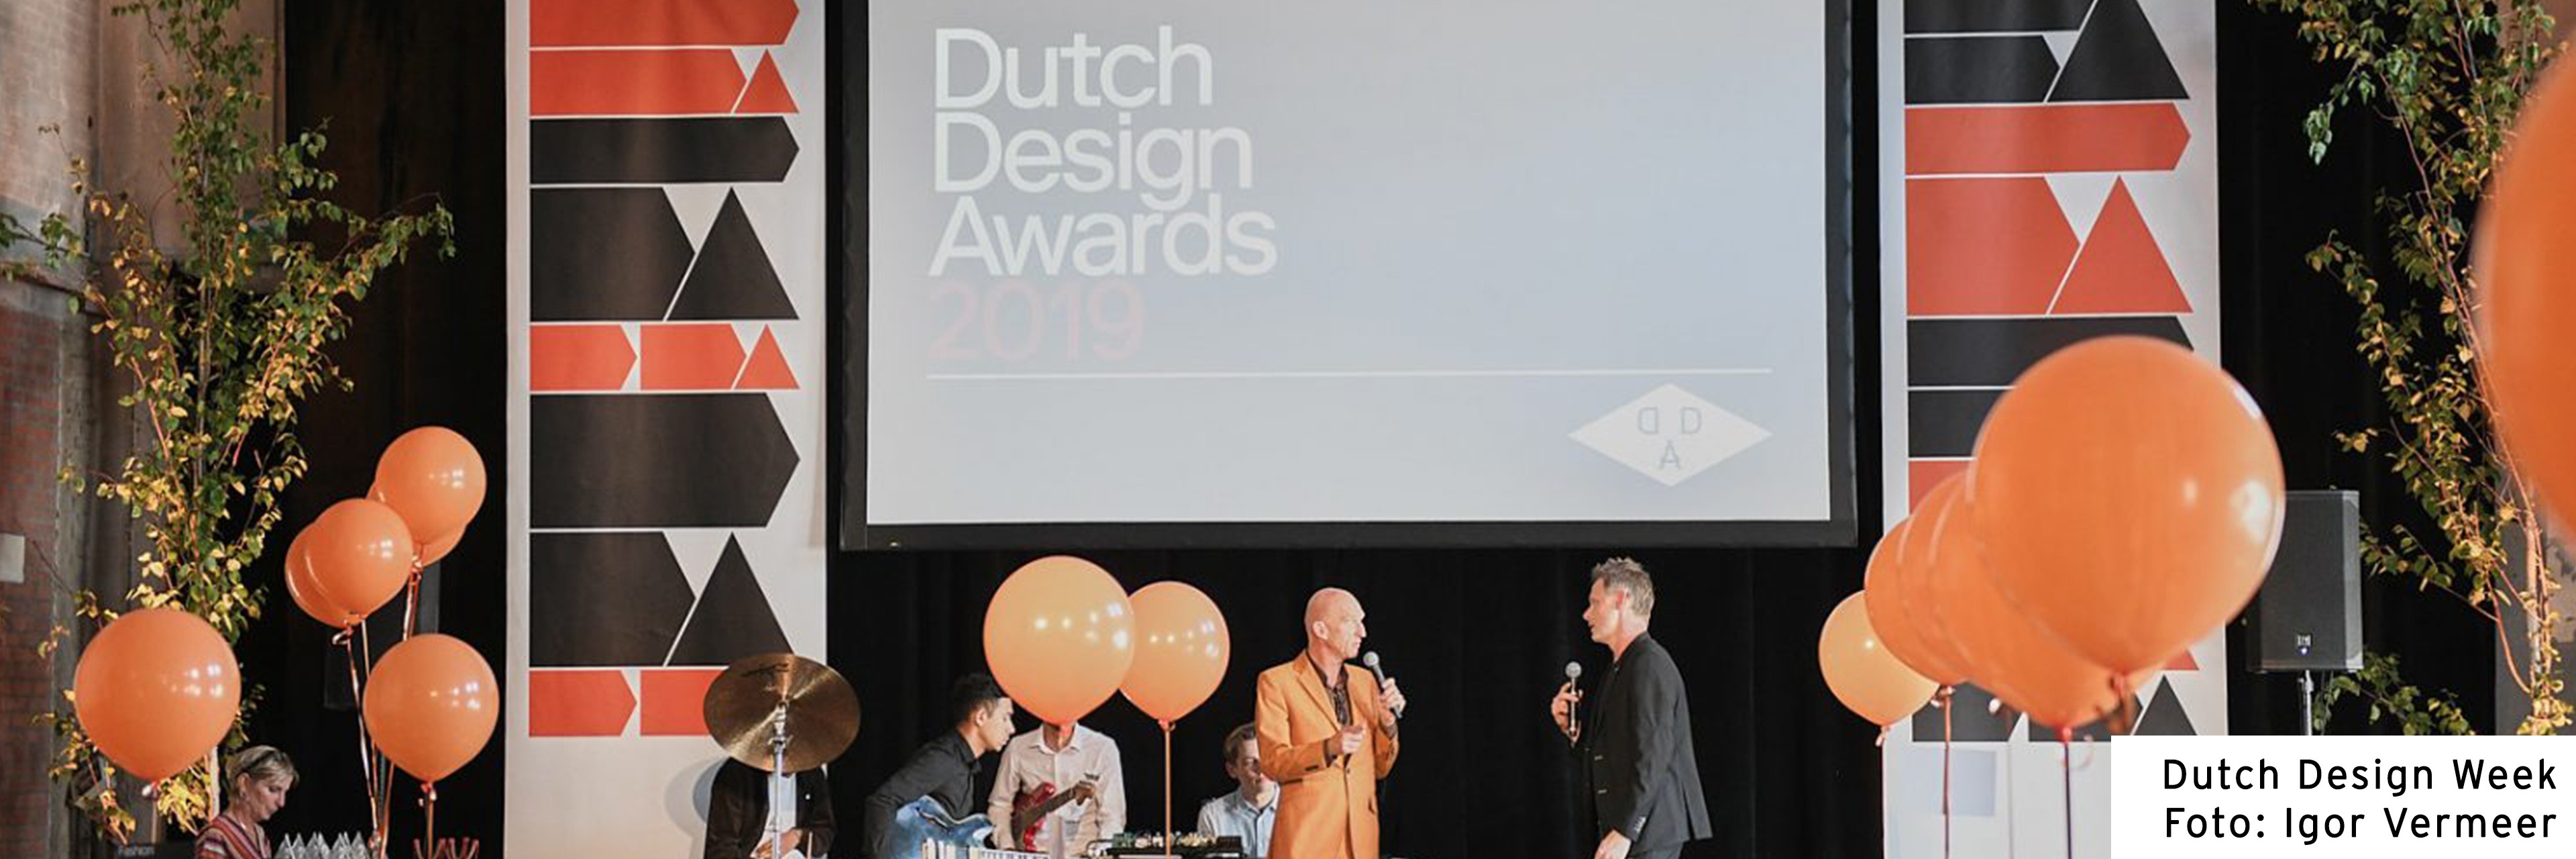 Dutch Design Week (Dutch Design Foundation)